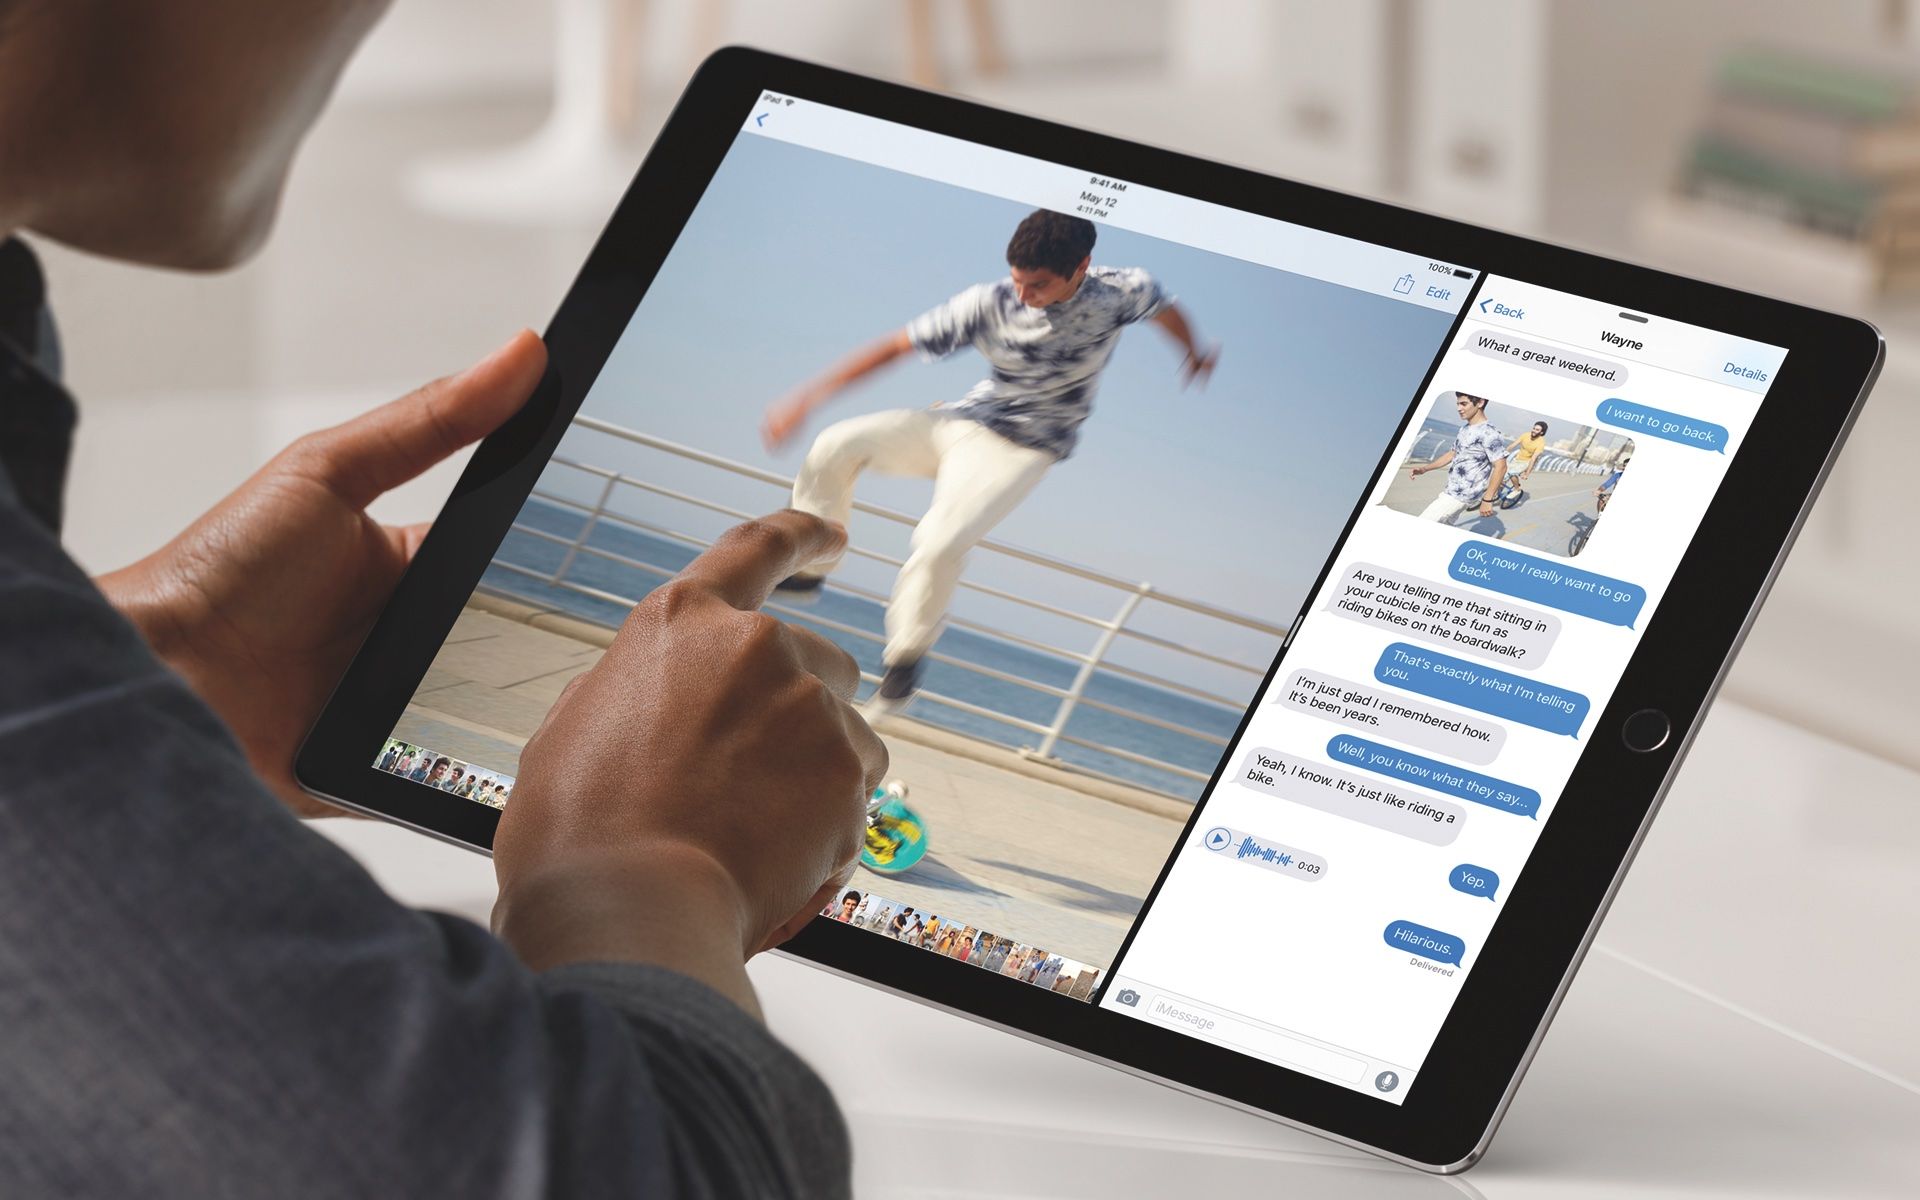 iPad-Pro-split-screen-multitasking-lifestyle-002.jpg